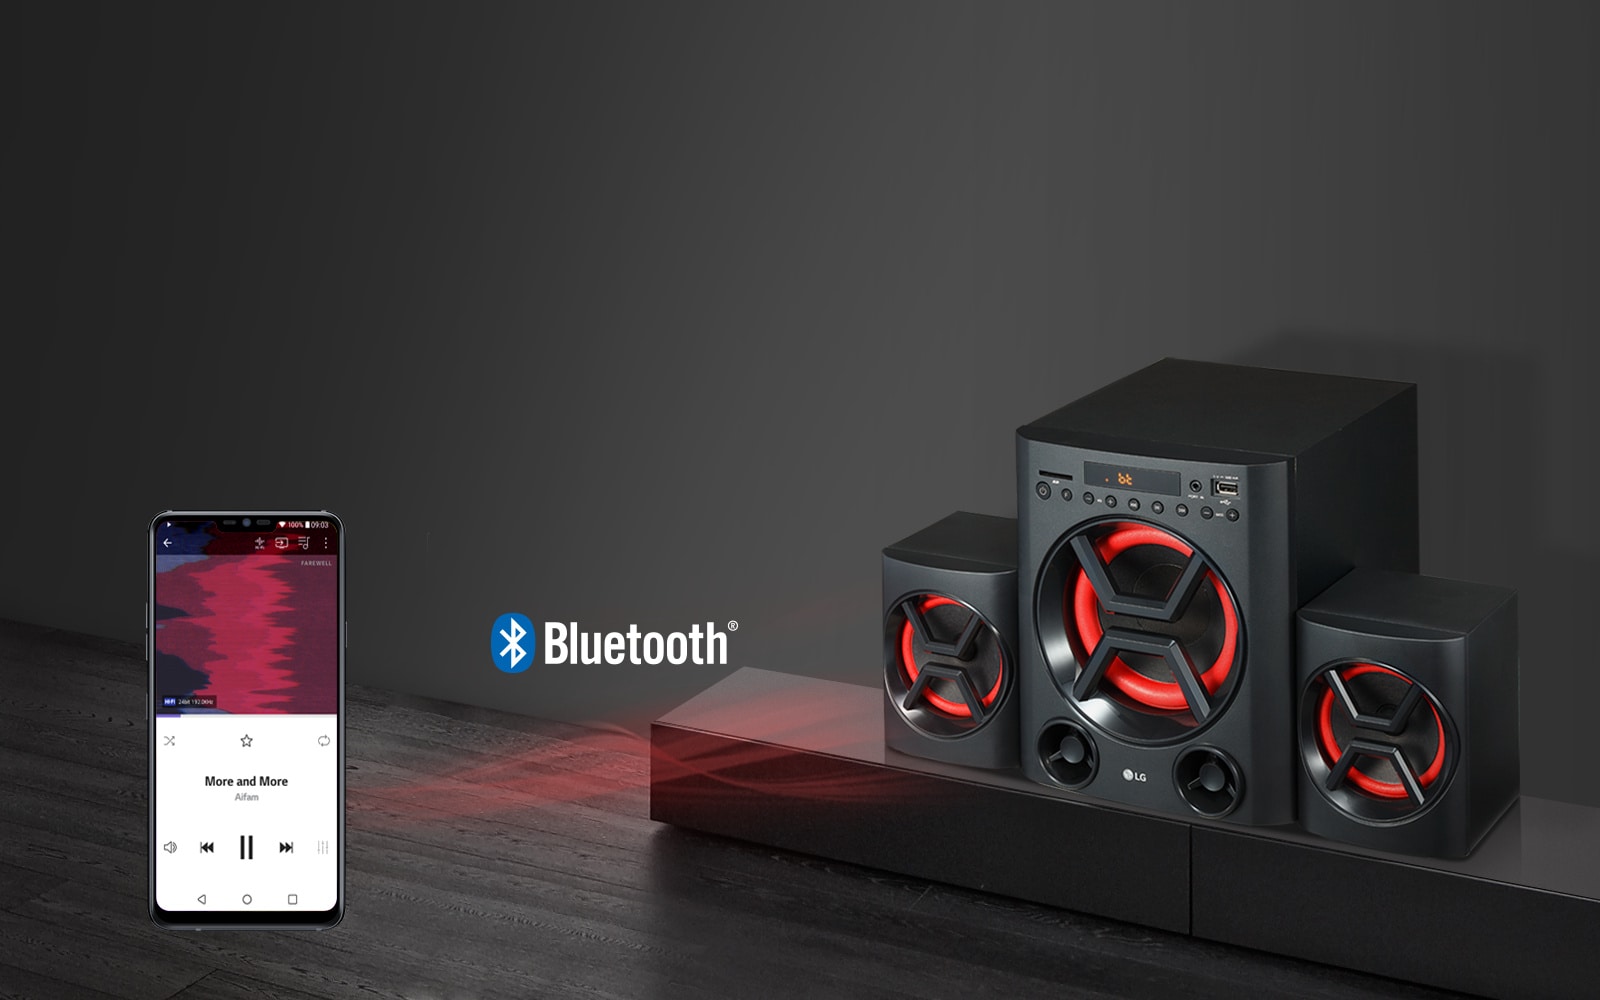 02_LK72B_Wireless_Audio_Streaming_via_Bluetooth_051018_Desktop